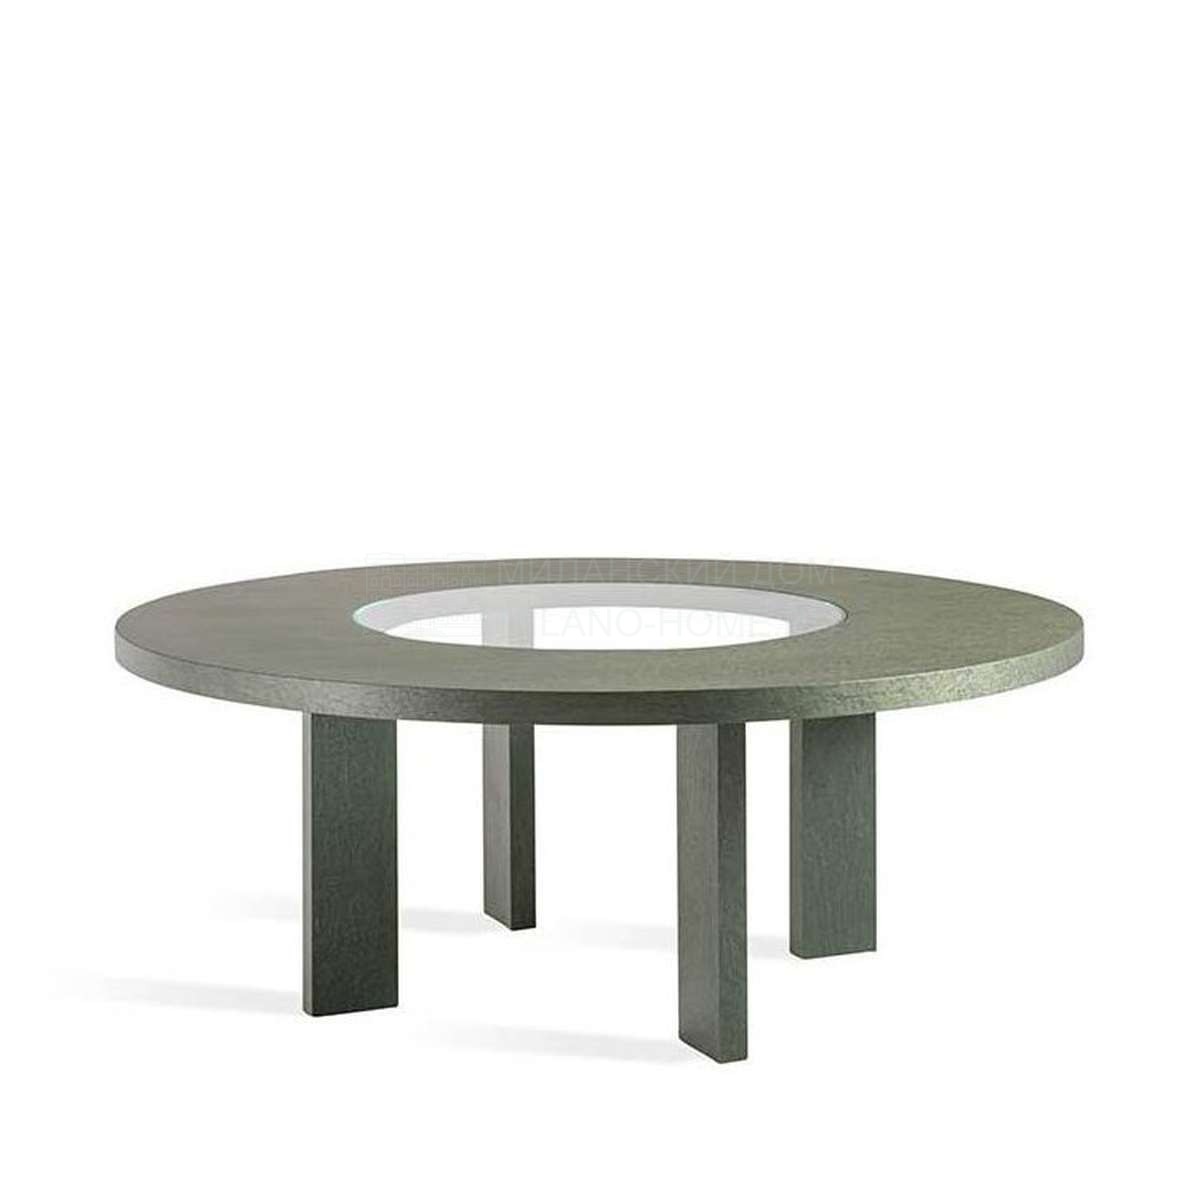 Обеденный стол Somma dining table round из Италии фабрики FENDI Casa